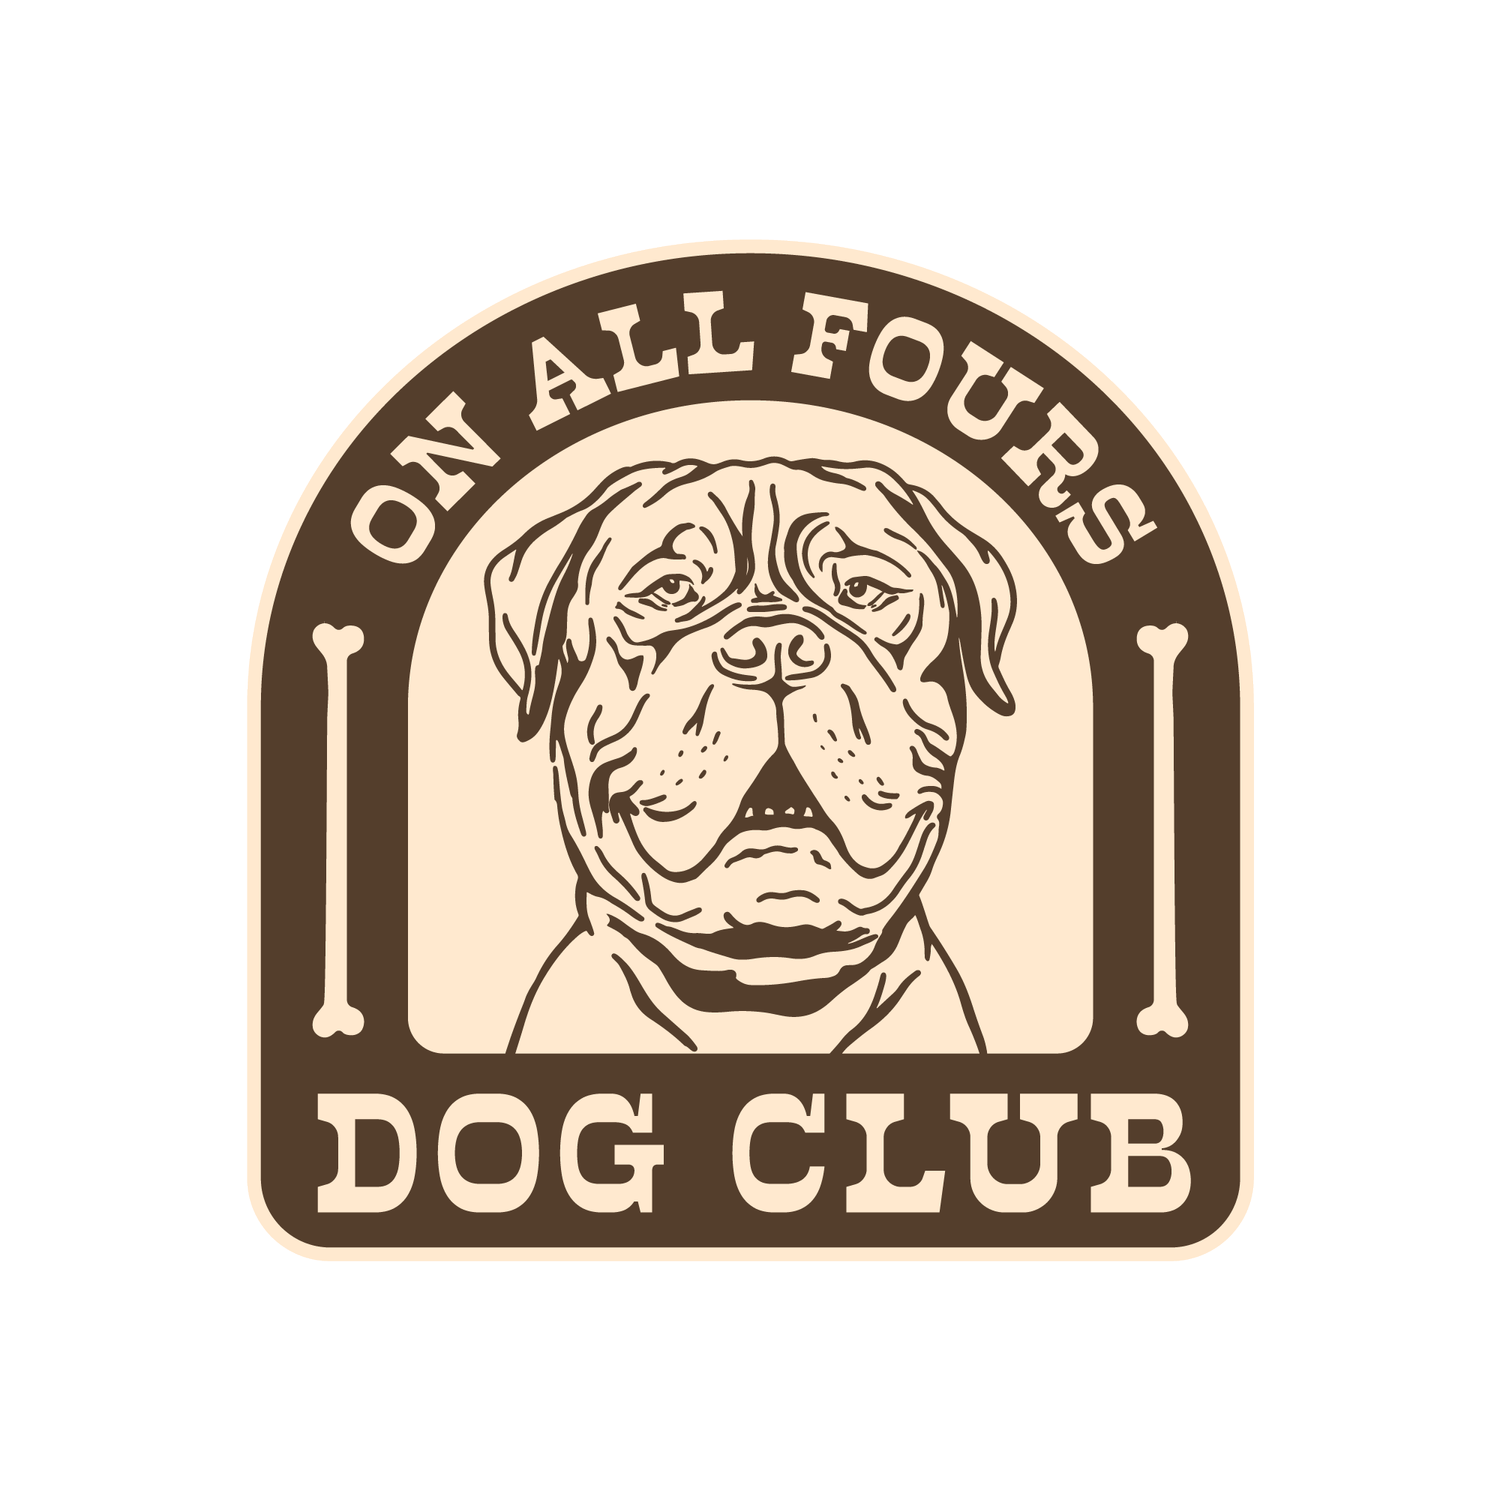 On All Fours Dog Club